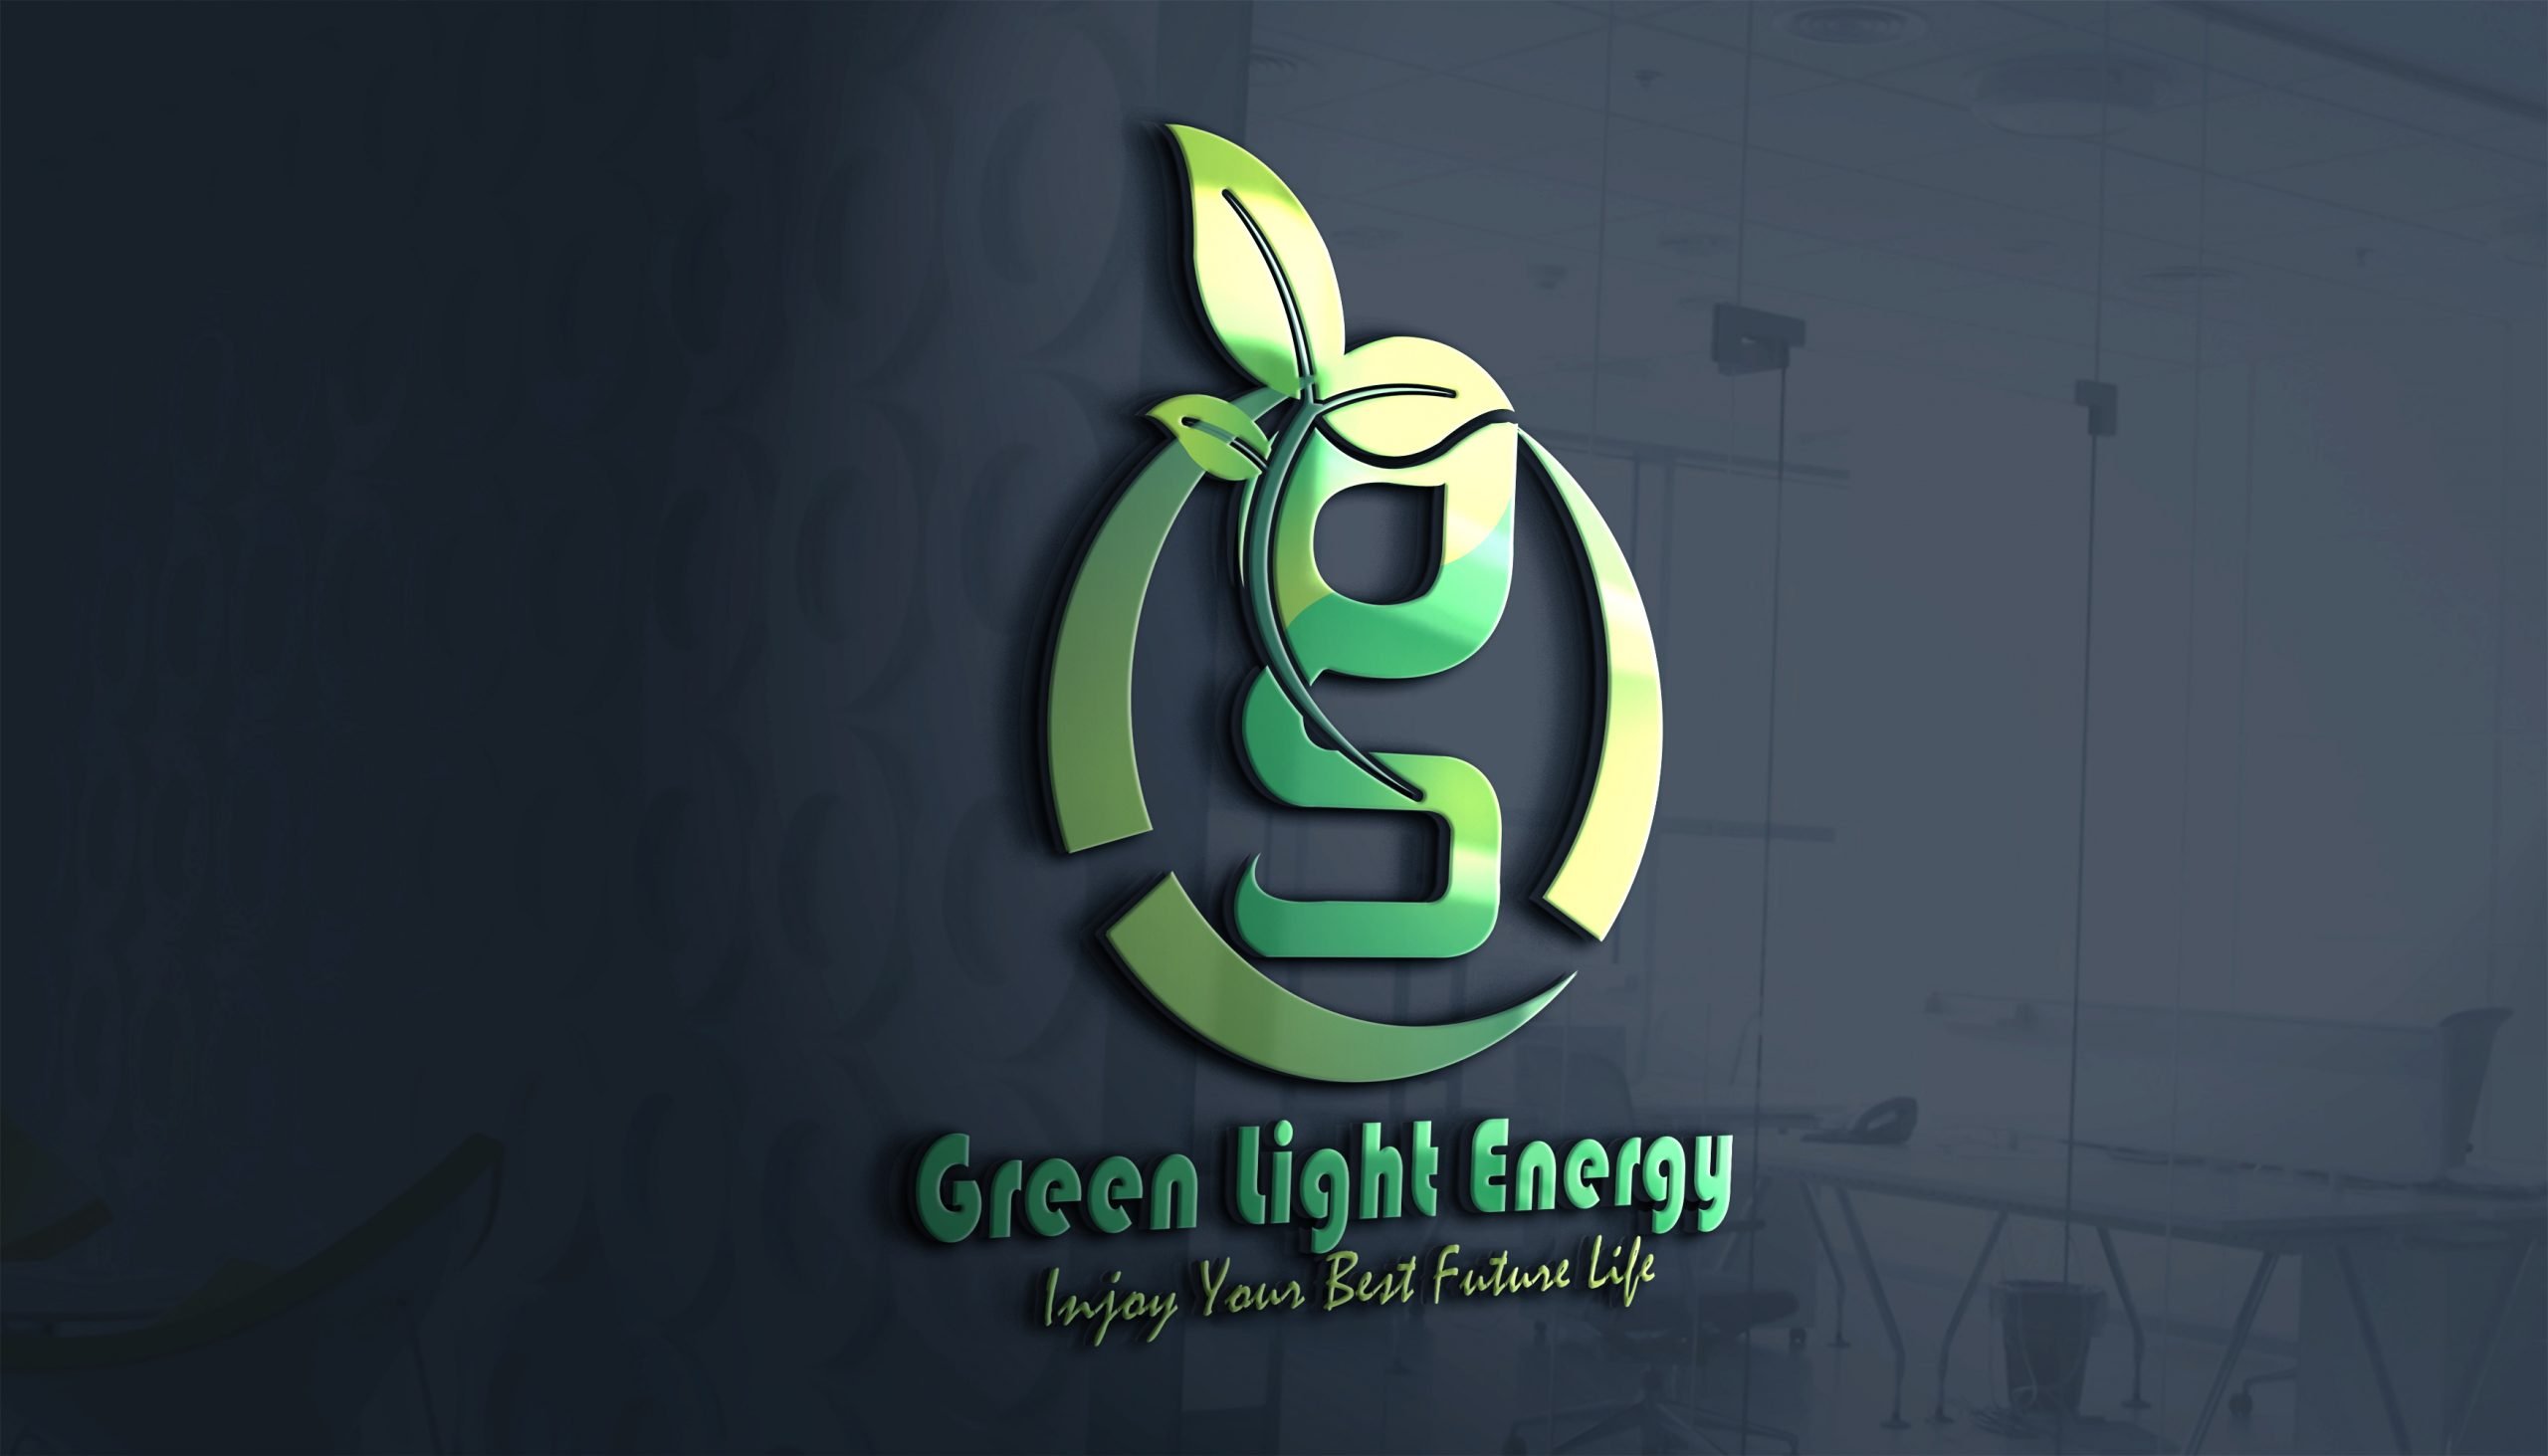 Renewable Energy Vector Logo Vector Art & Graphics | freevector.com